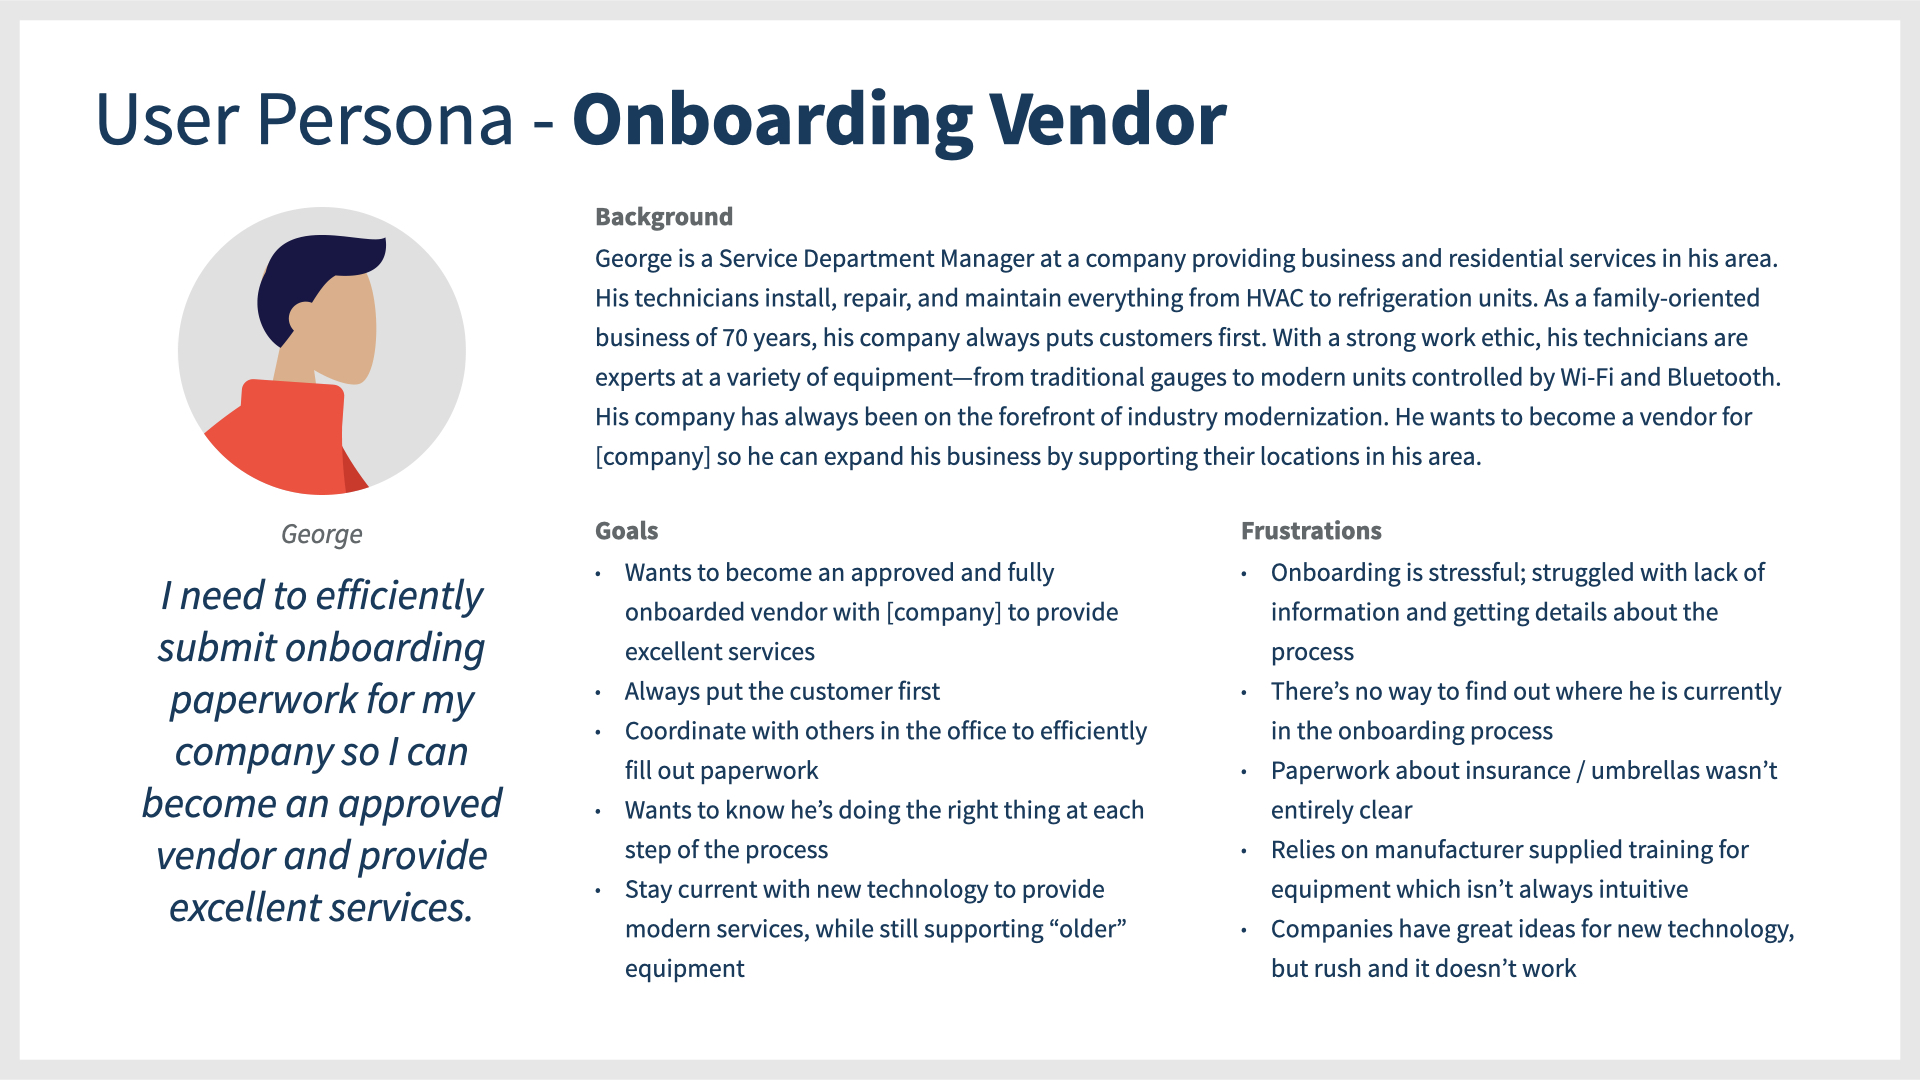 User persona for onboarding vendor